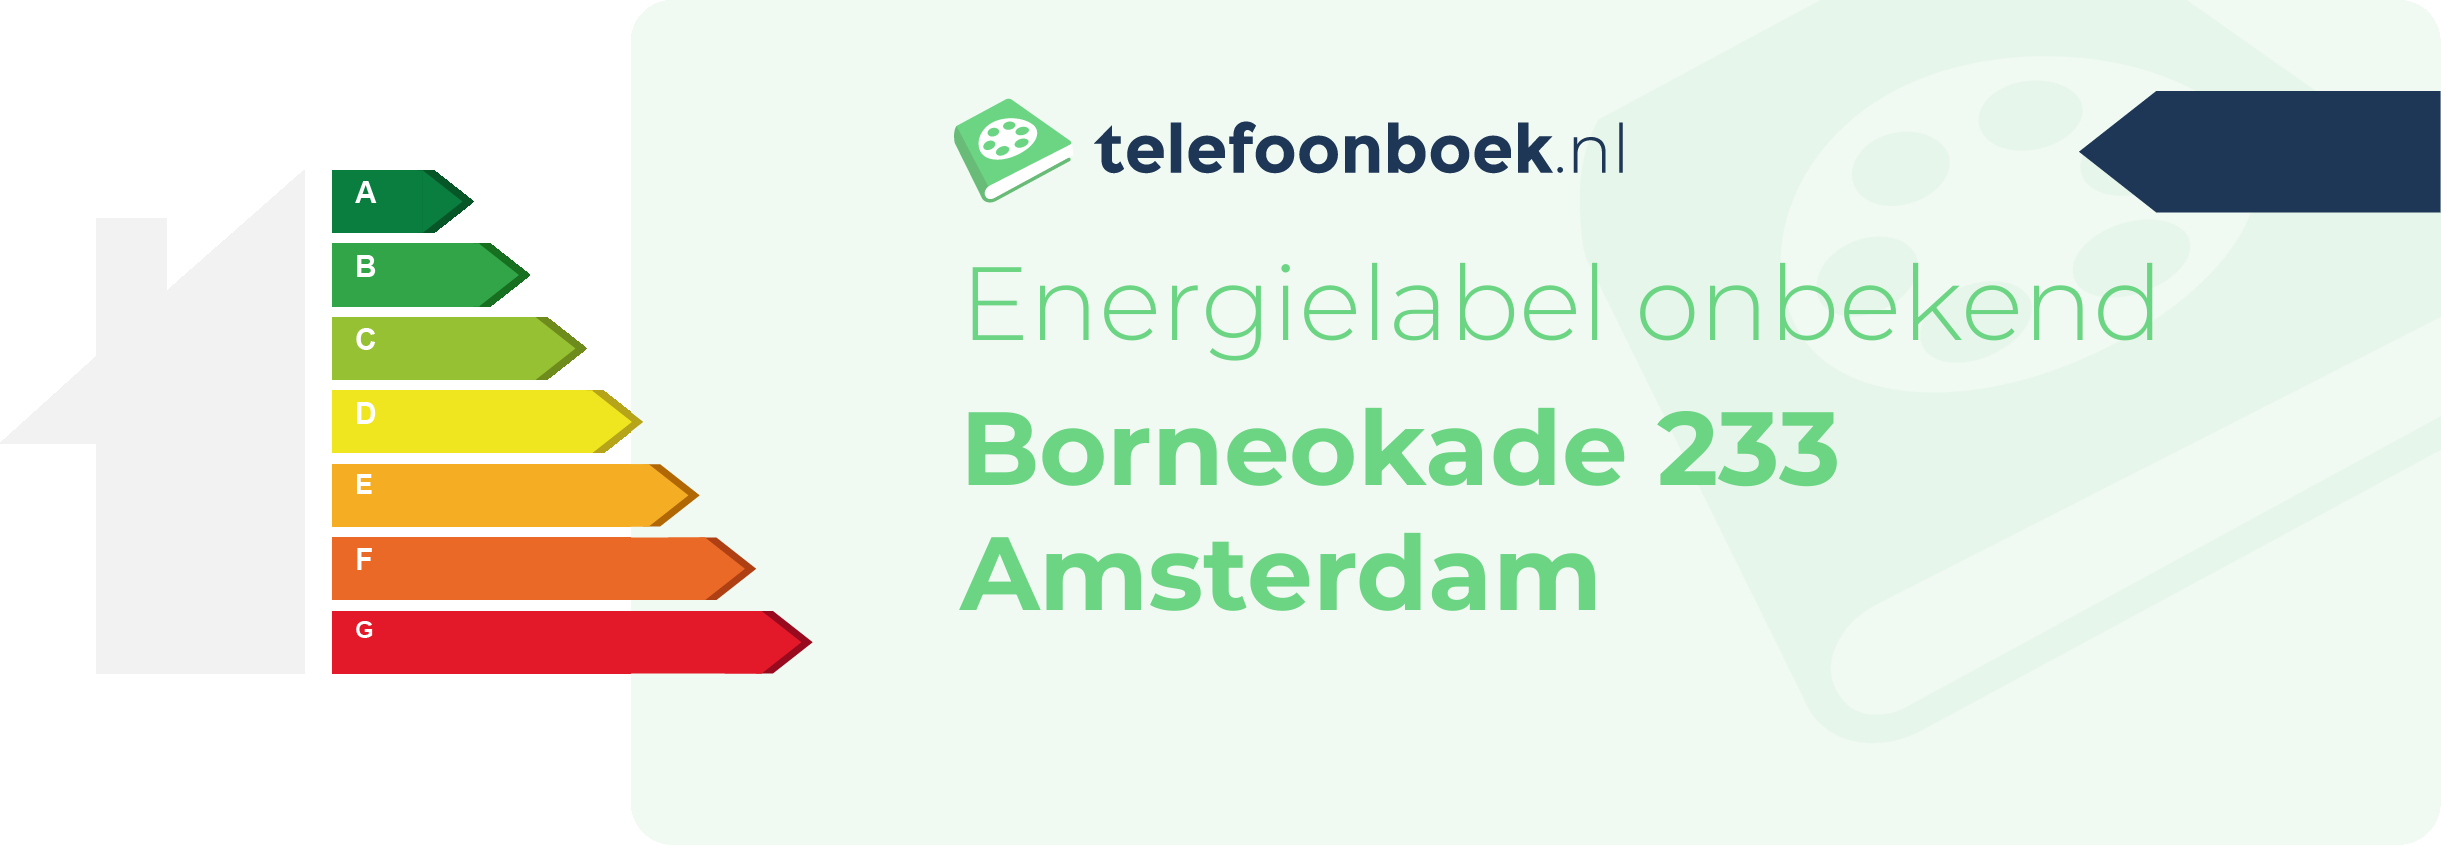 Energielabel Borneokade 233 Amsterdam